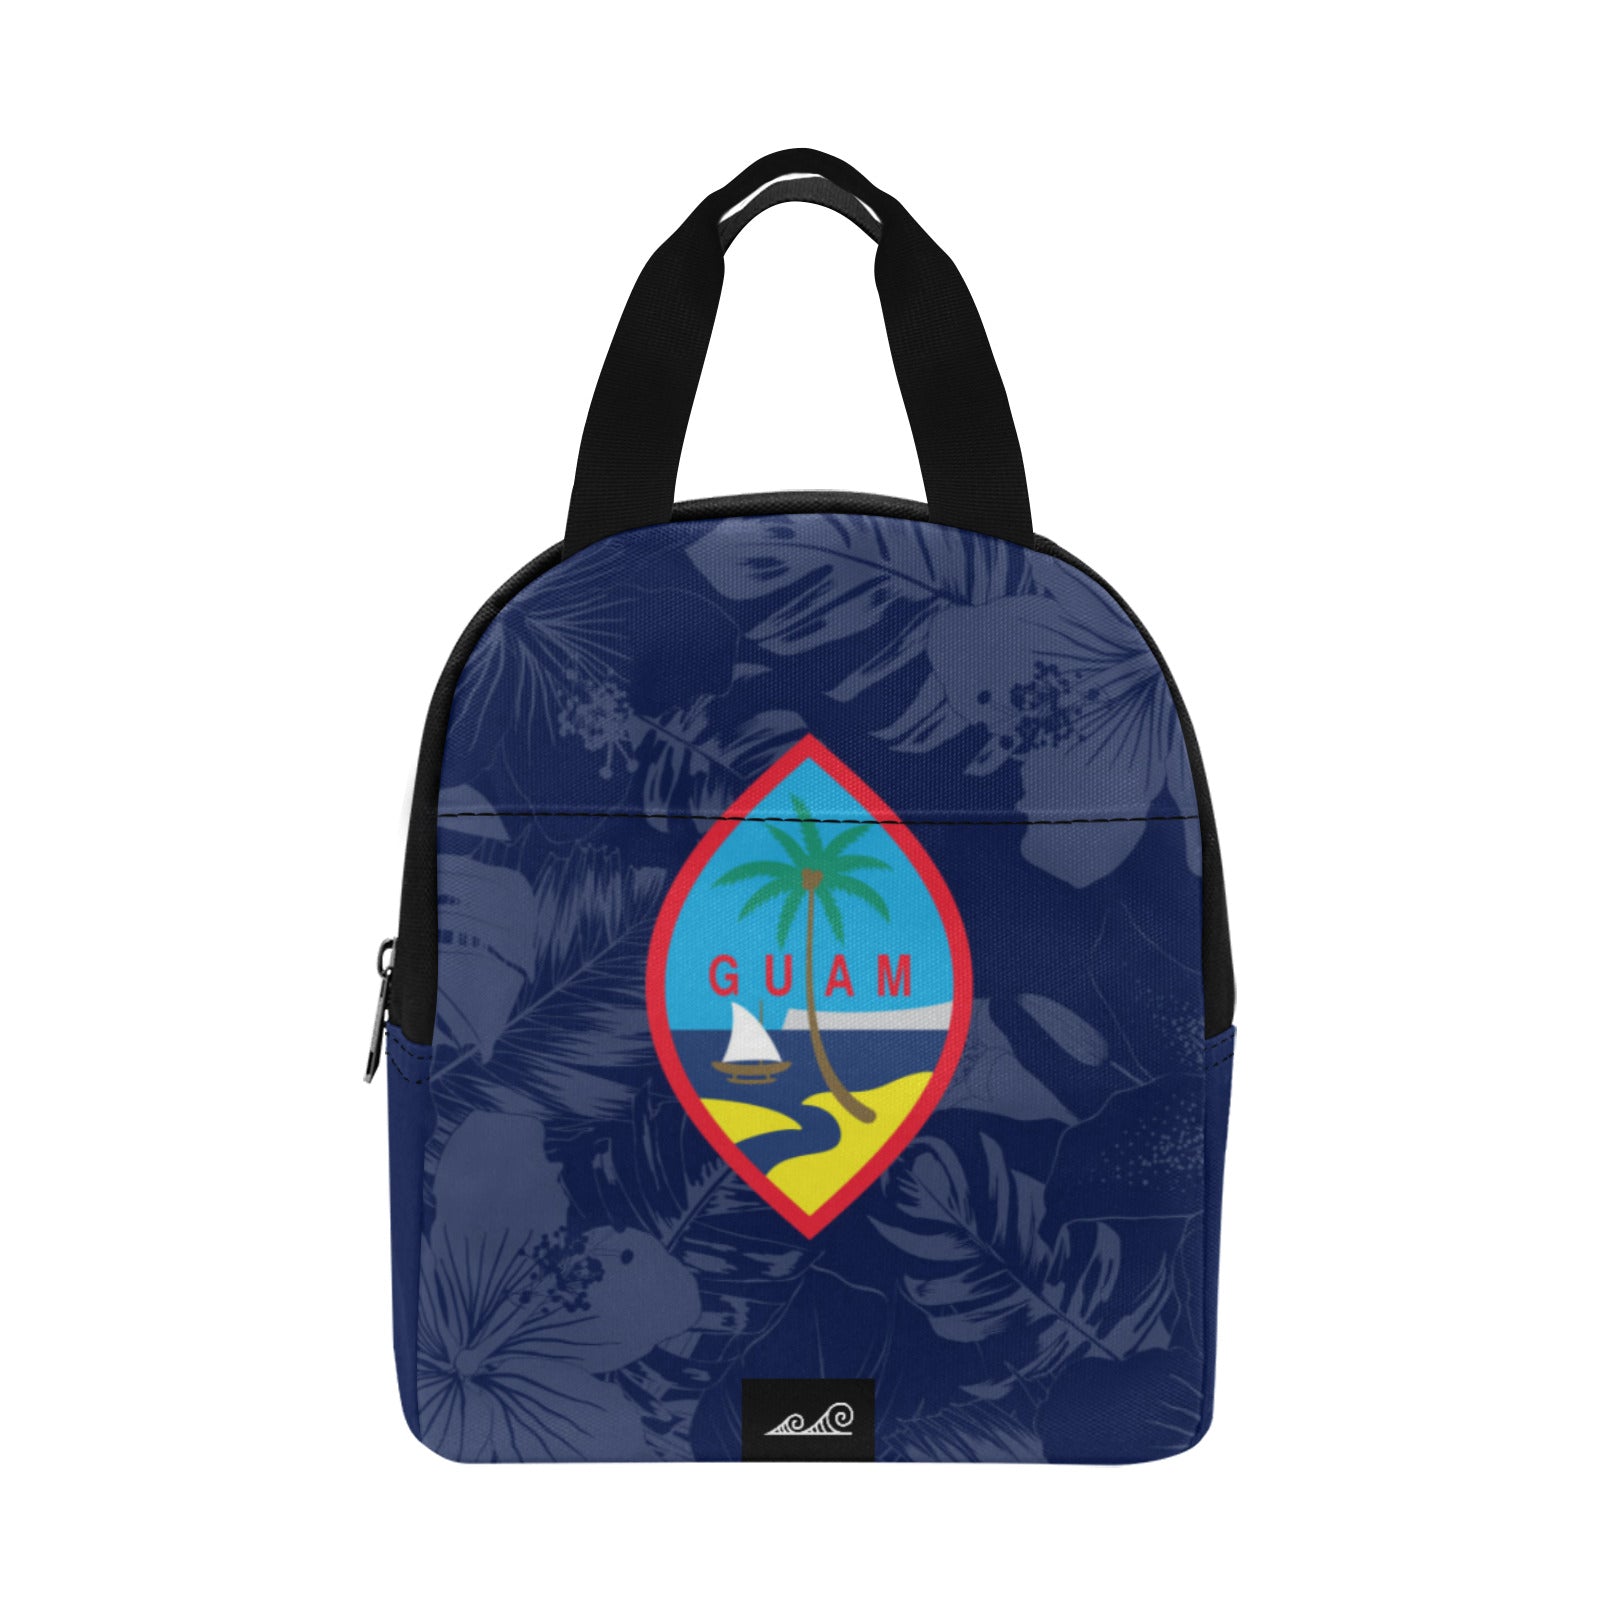 Guam Flag Hibiscus Zipper Lunch Bag